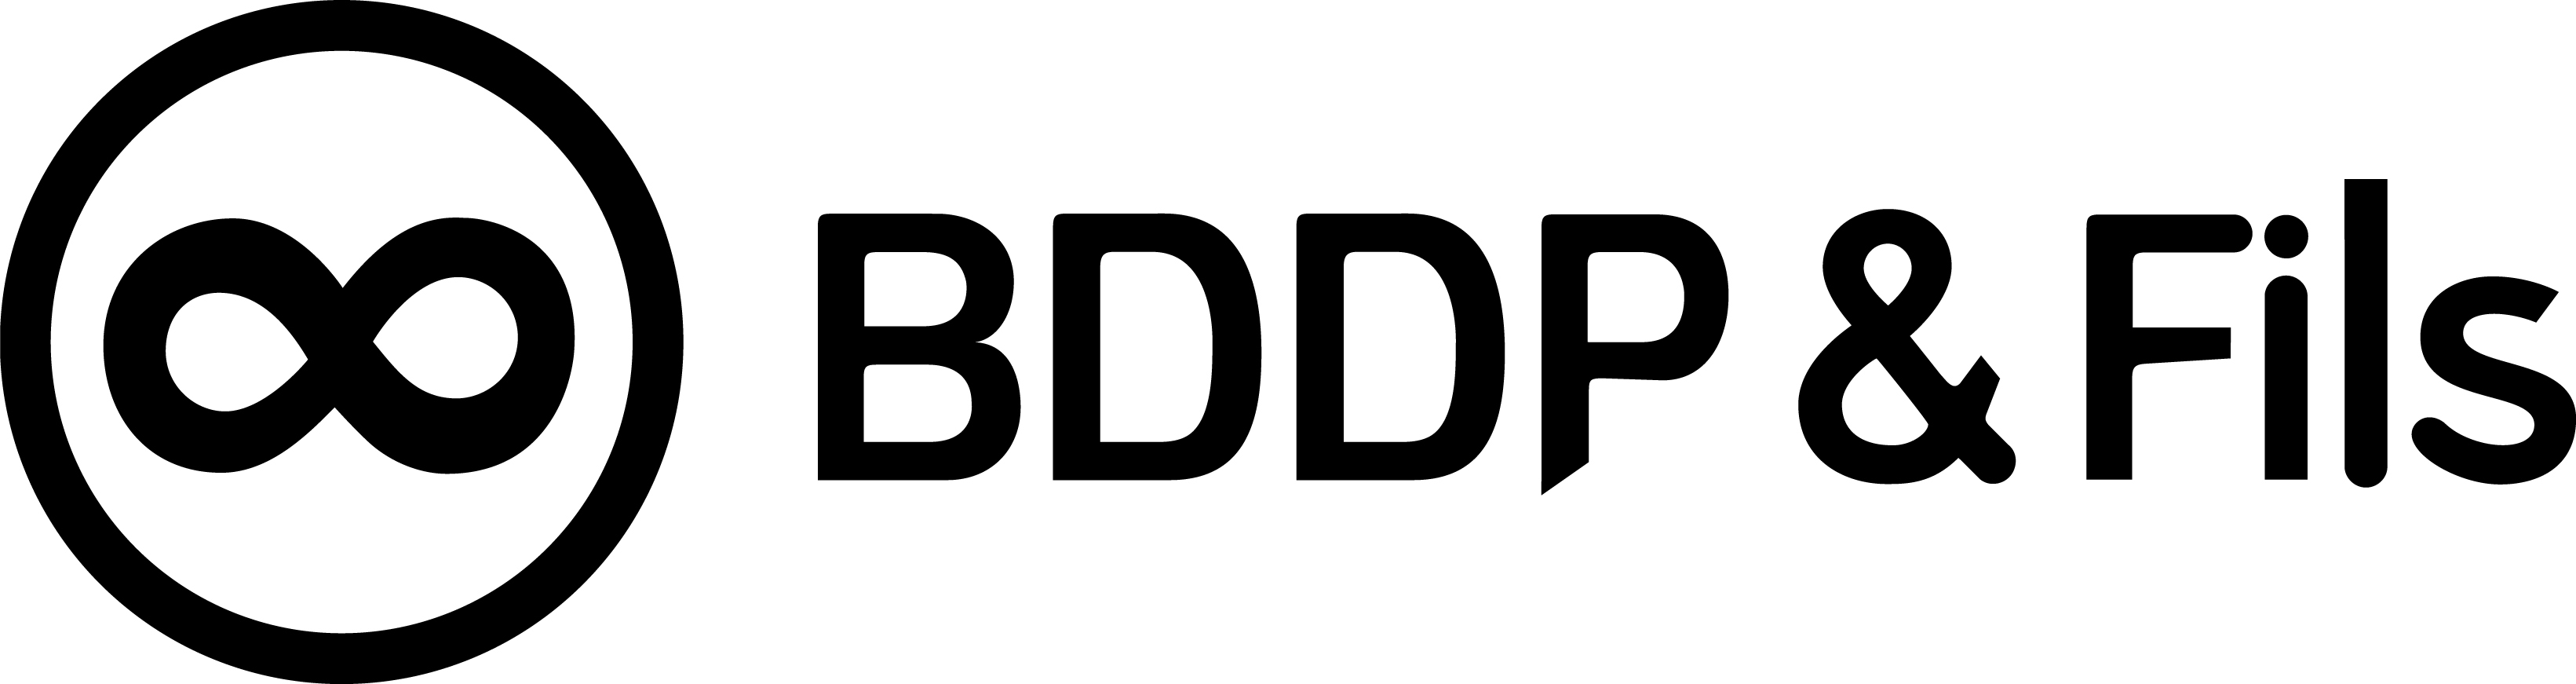 BDDP & Fils Logo photo - 1